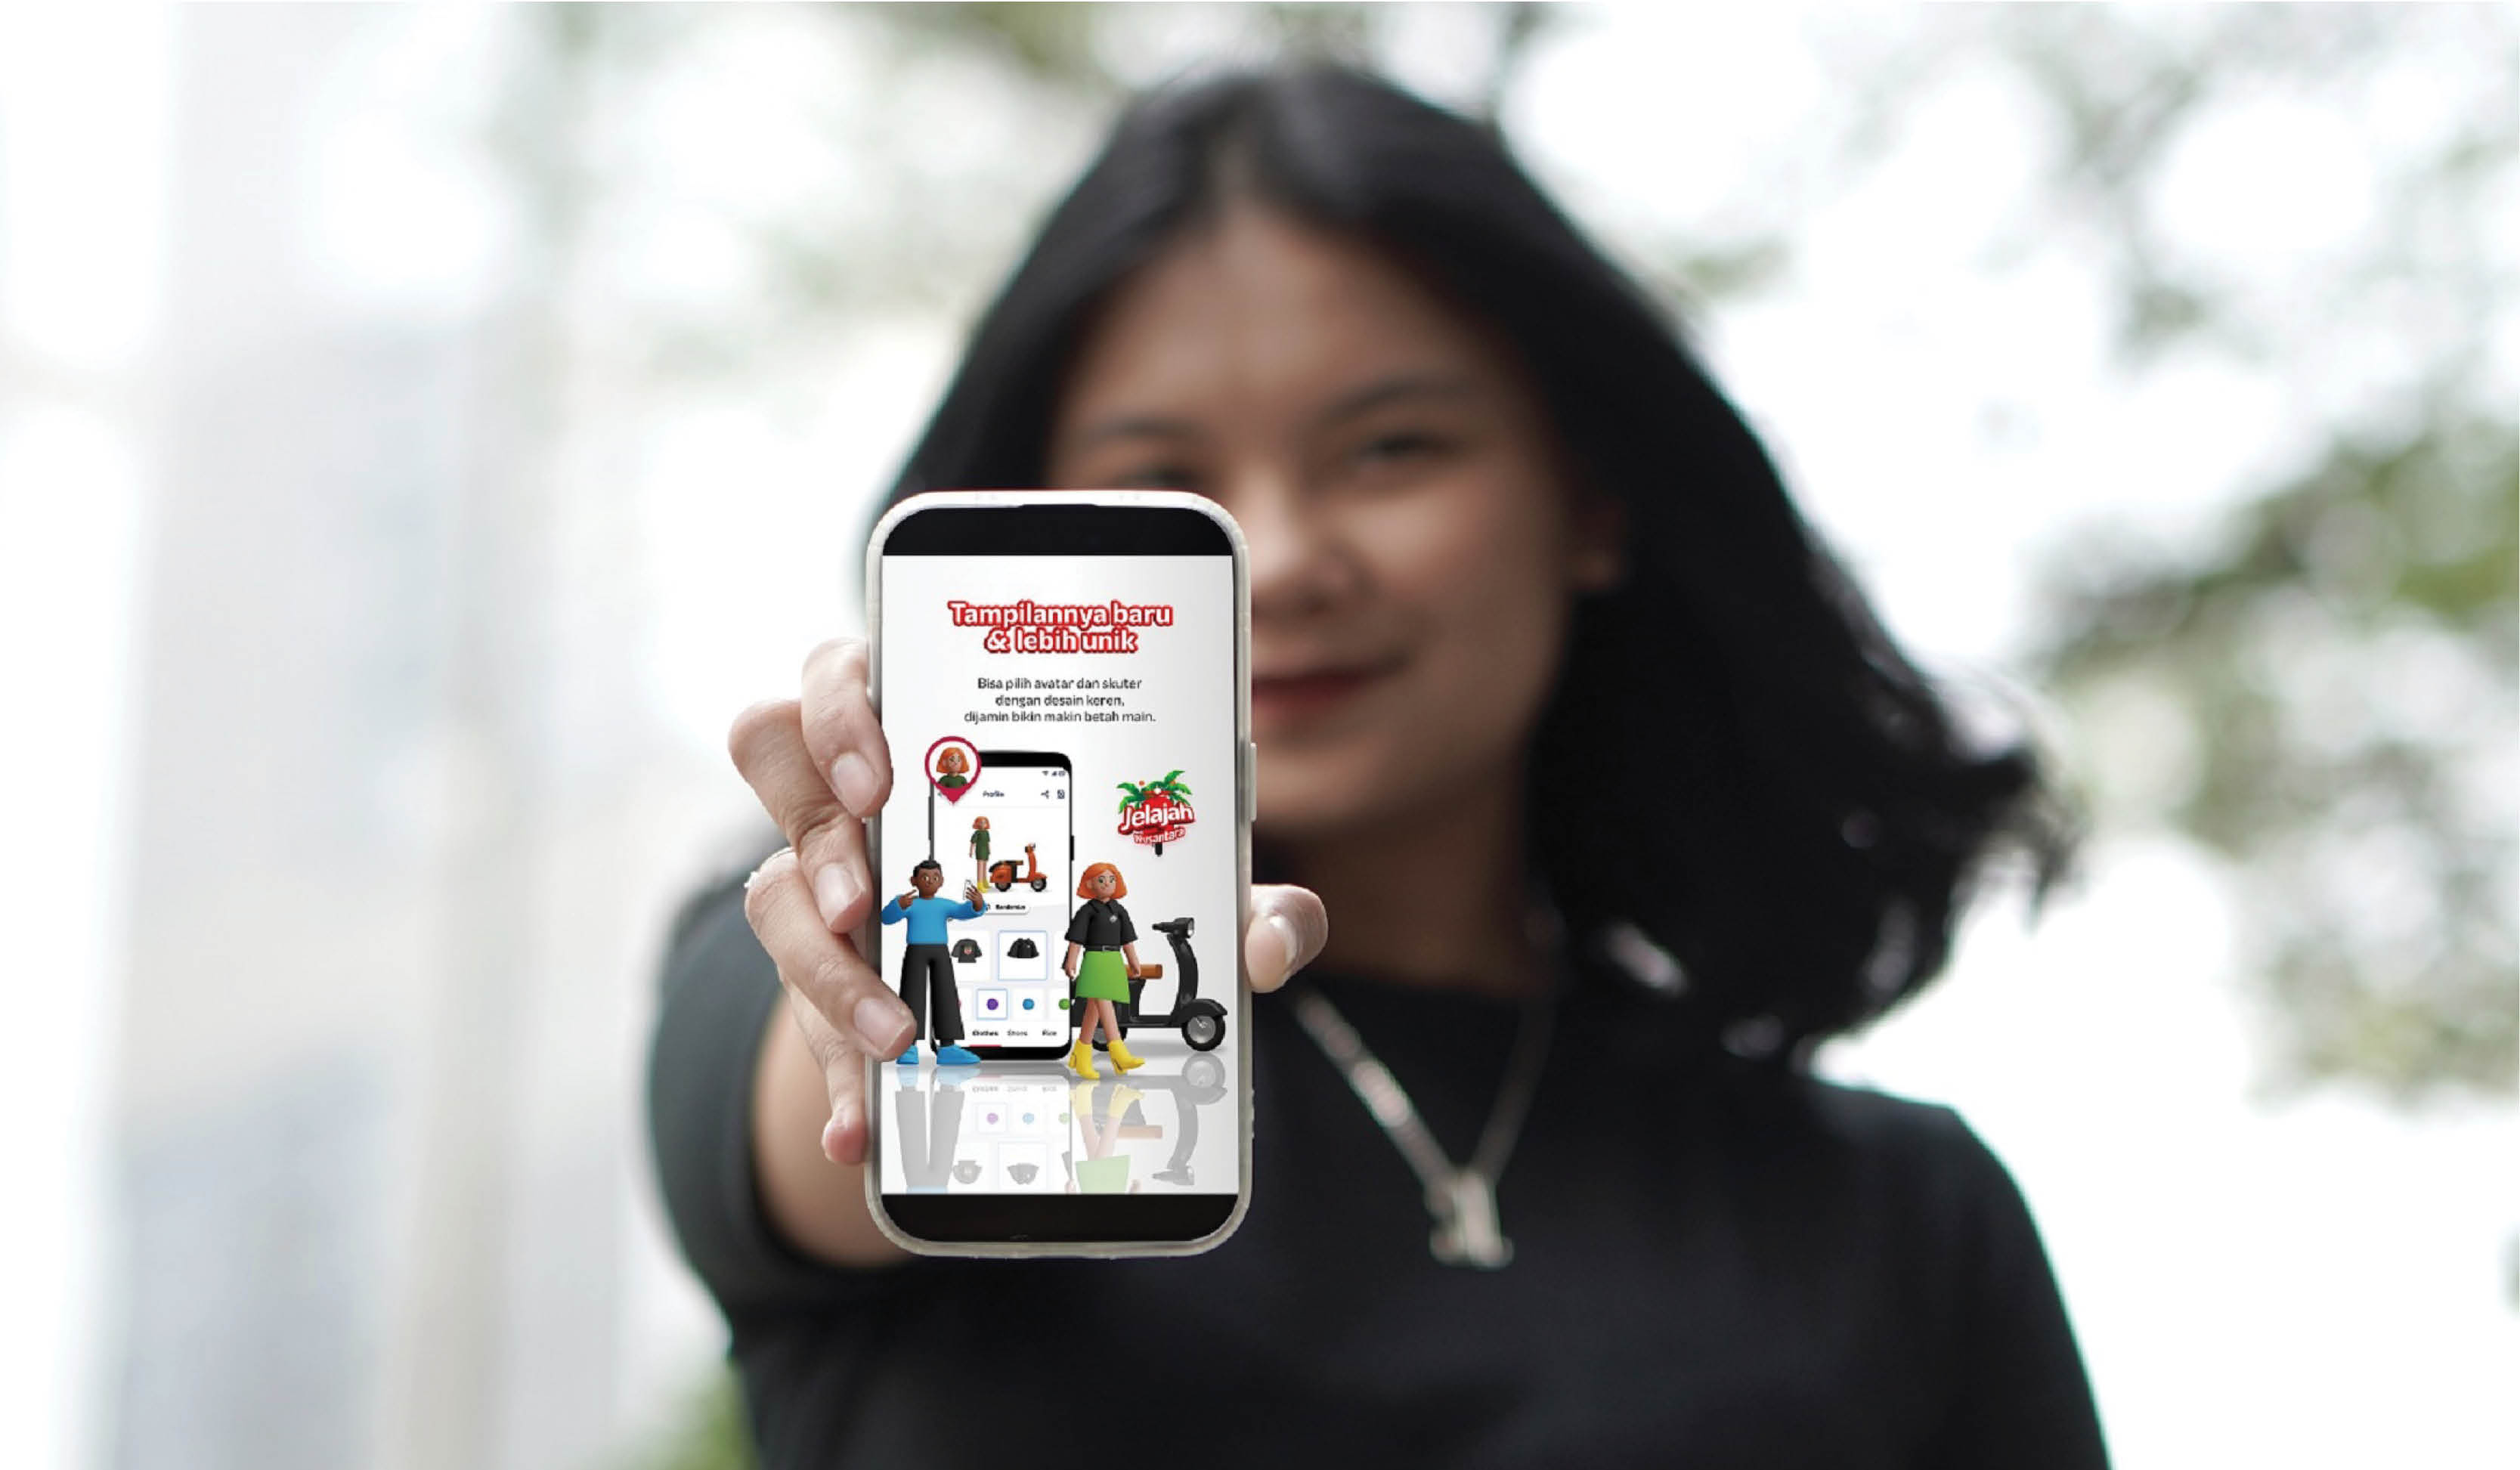 Eksklusif! Telkomsel Memperluas Pengalaman Digital dengan 'Jelajah Nusantara 2.0' di Aplikasi MyTelkomsel